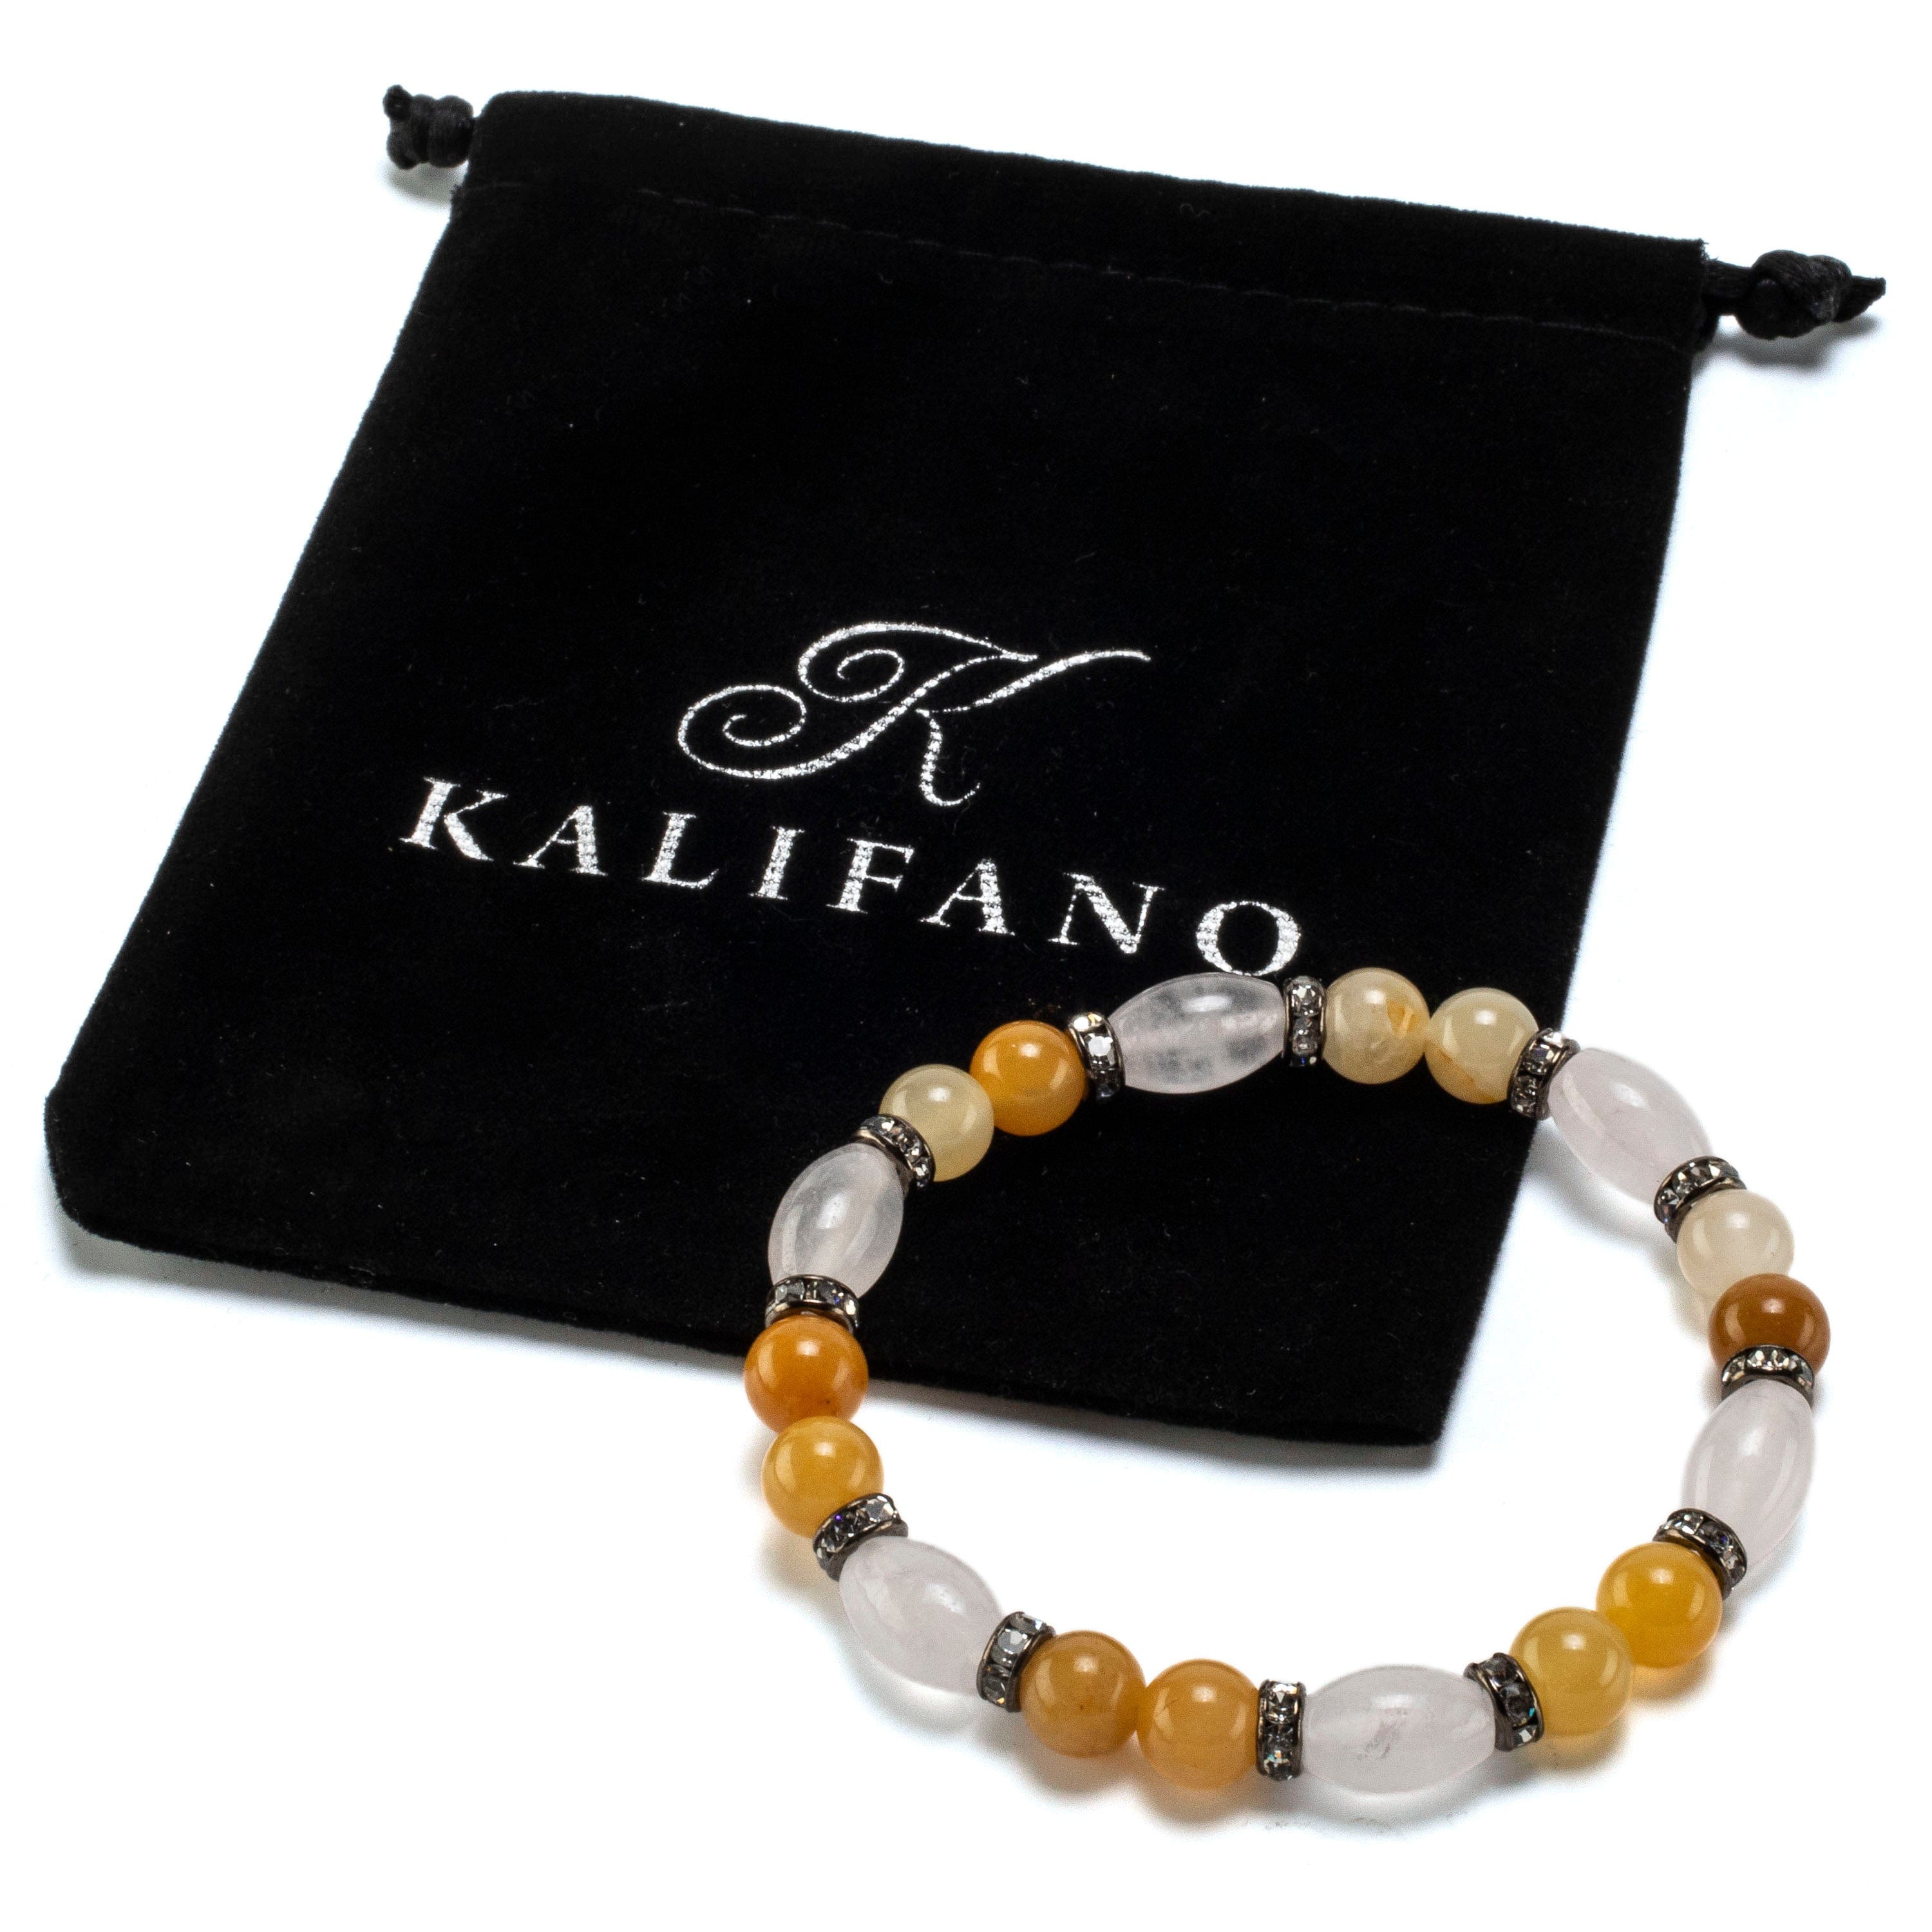 Kalifano Gemstone Bracelets Oval Rose Quartz and Round Butter Jade with Crystal Accent Beads Gemstone Elastic Bracelet BLUE-BGP-027